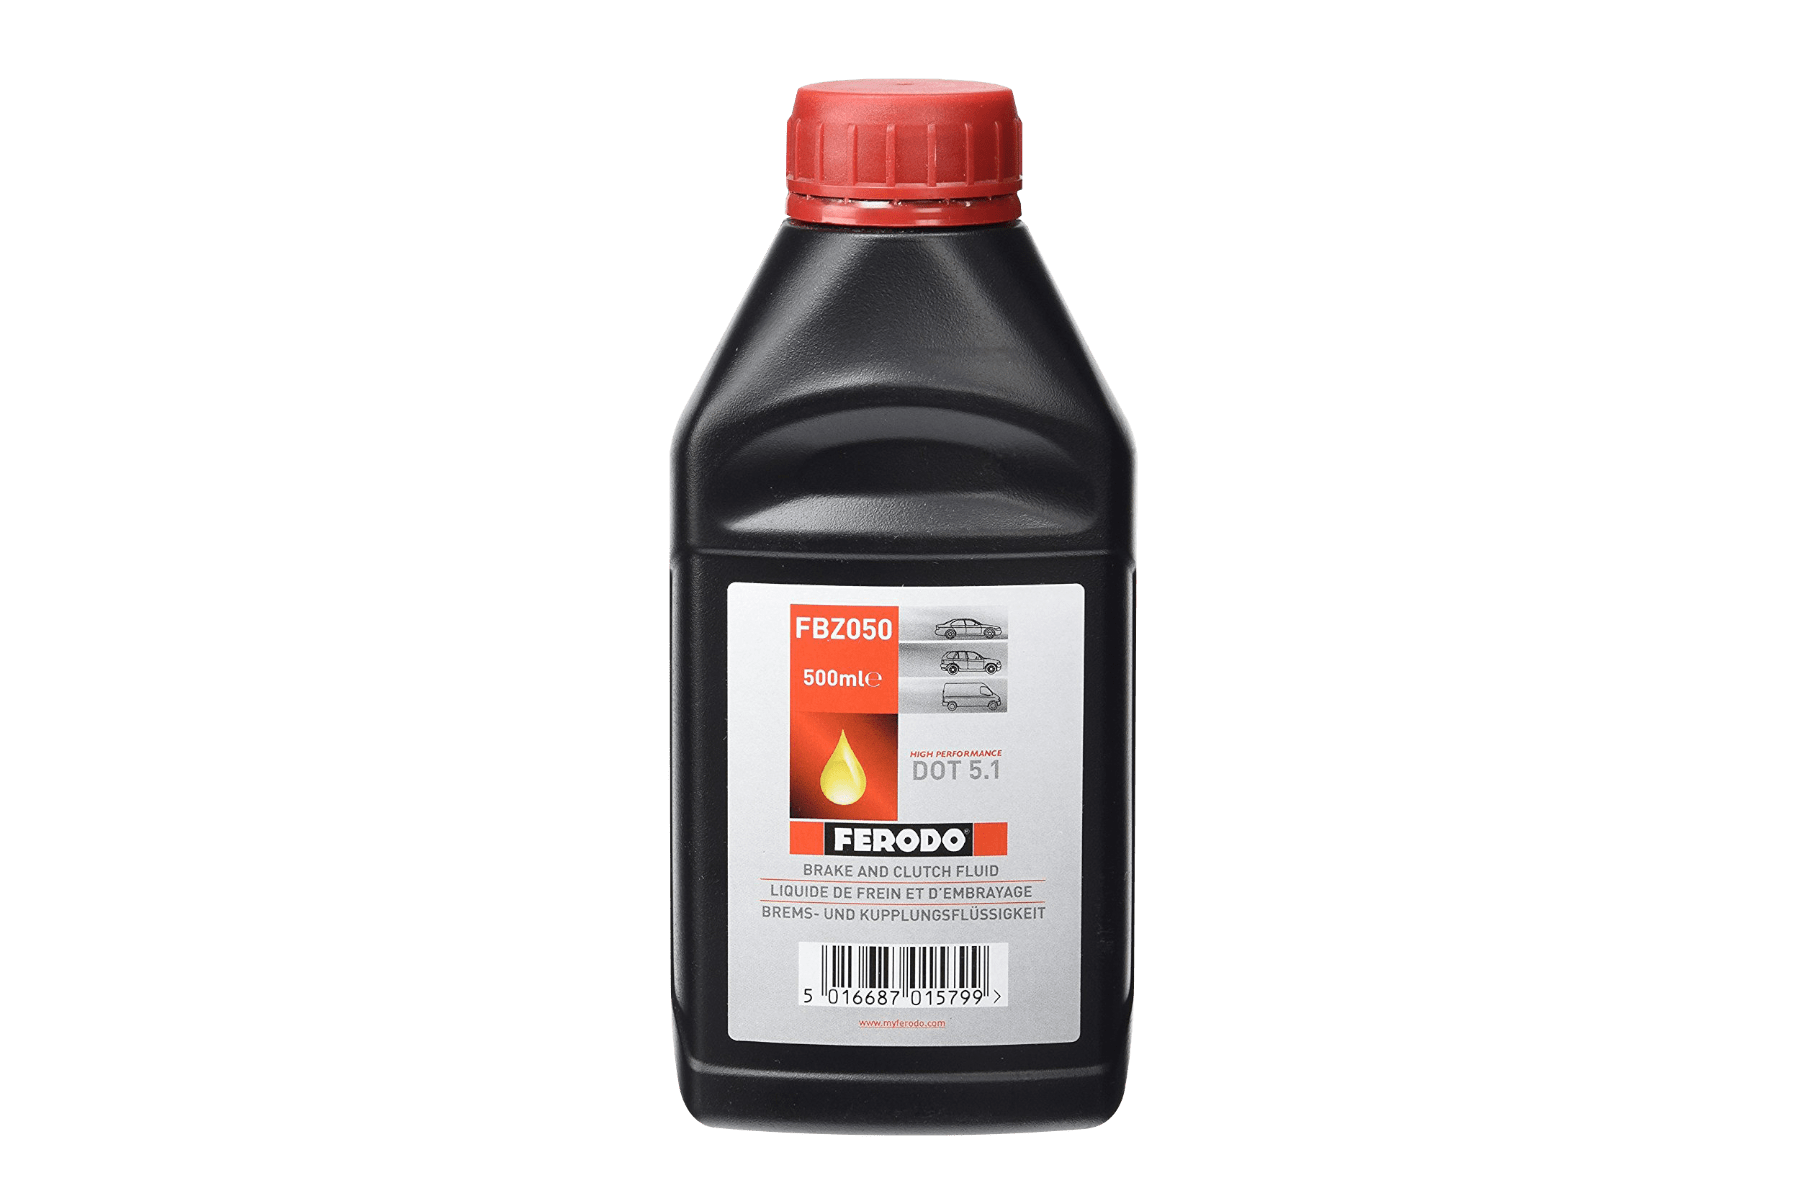 FORMULA Liquide de Freins DOT 4 version 250 ml